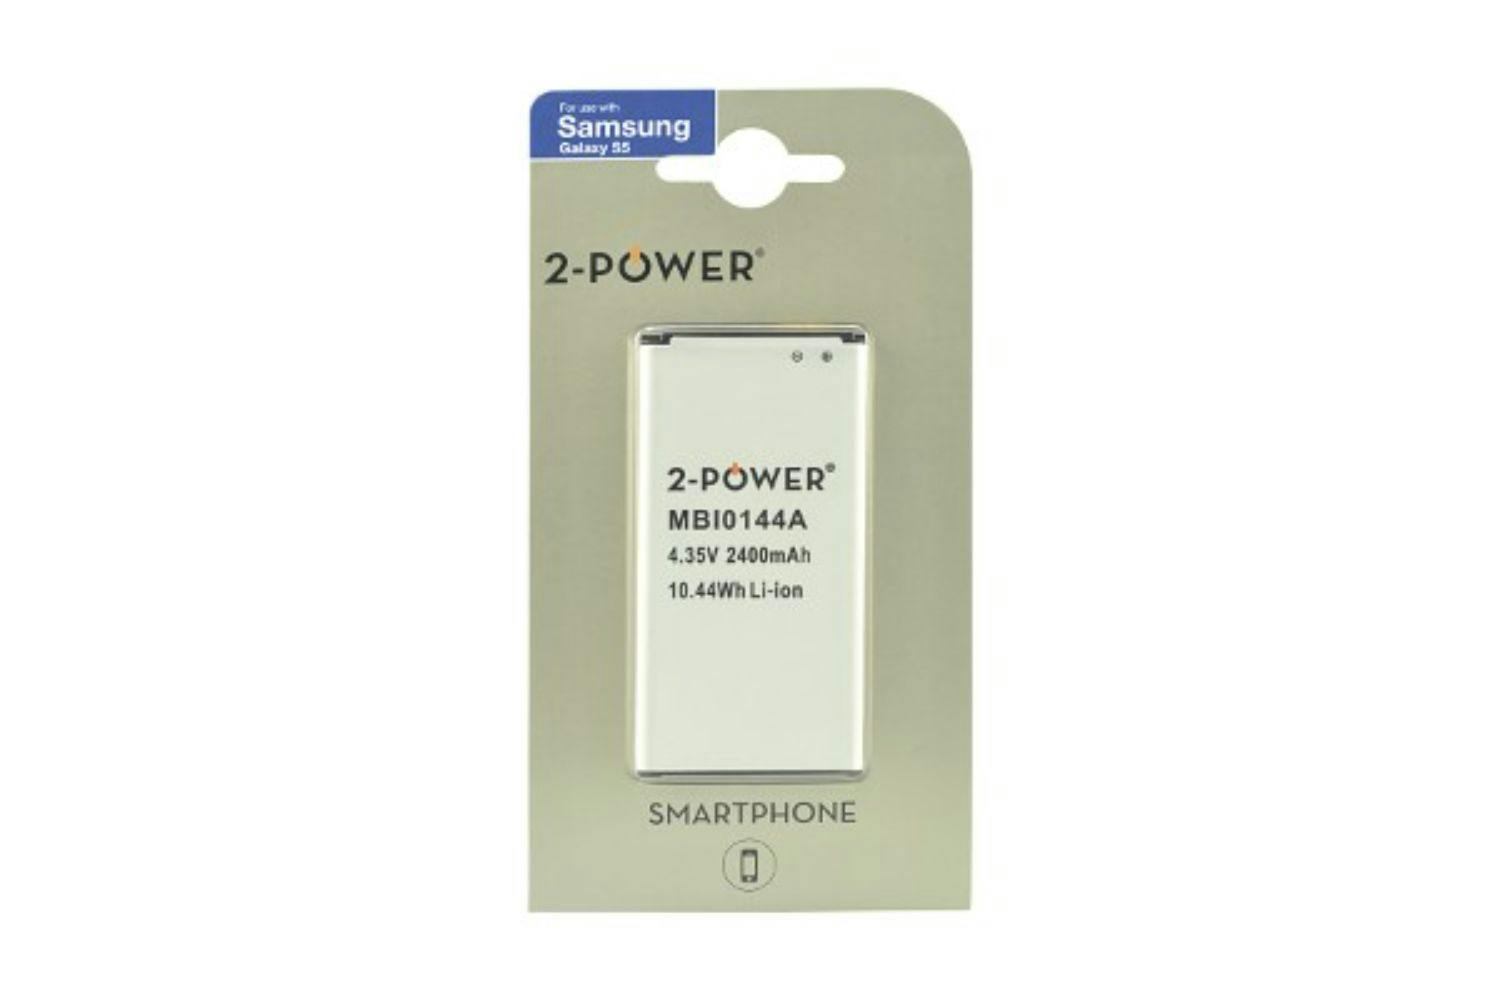 2-Power 2800mah Smartphone Battery